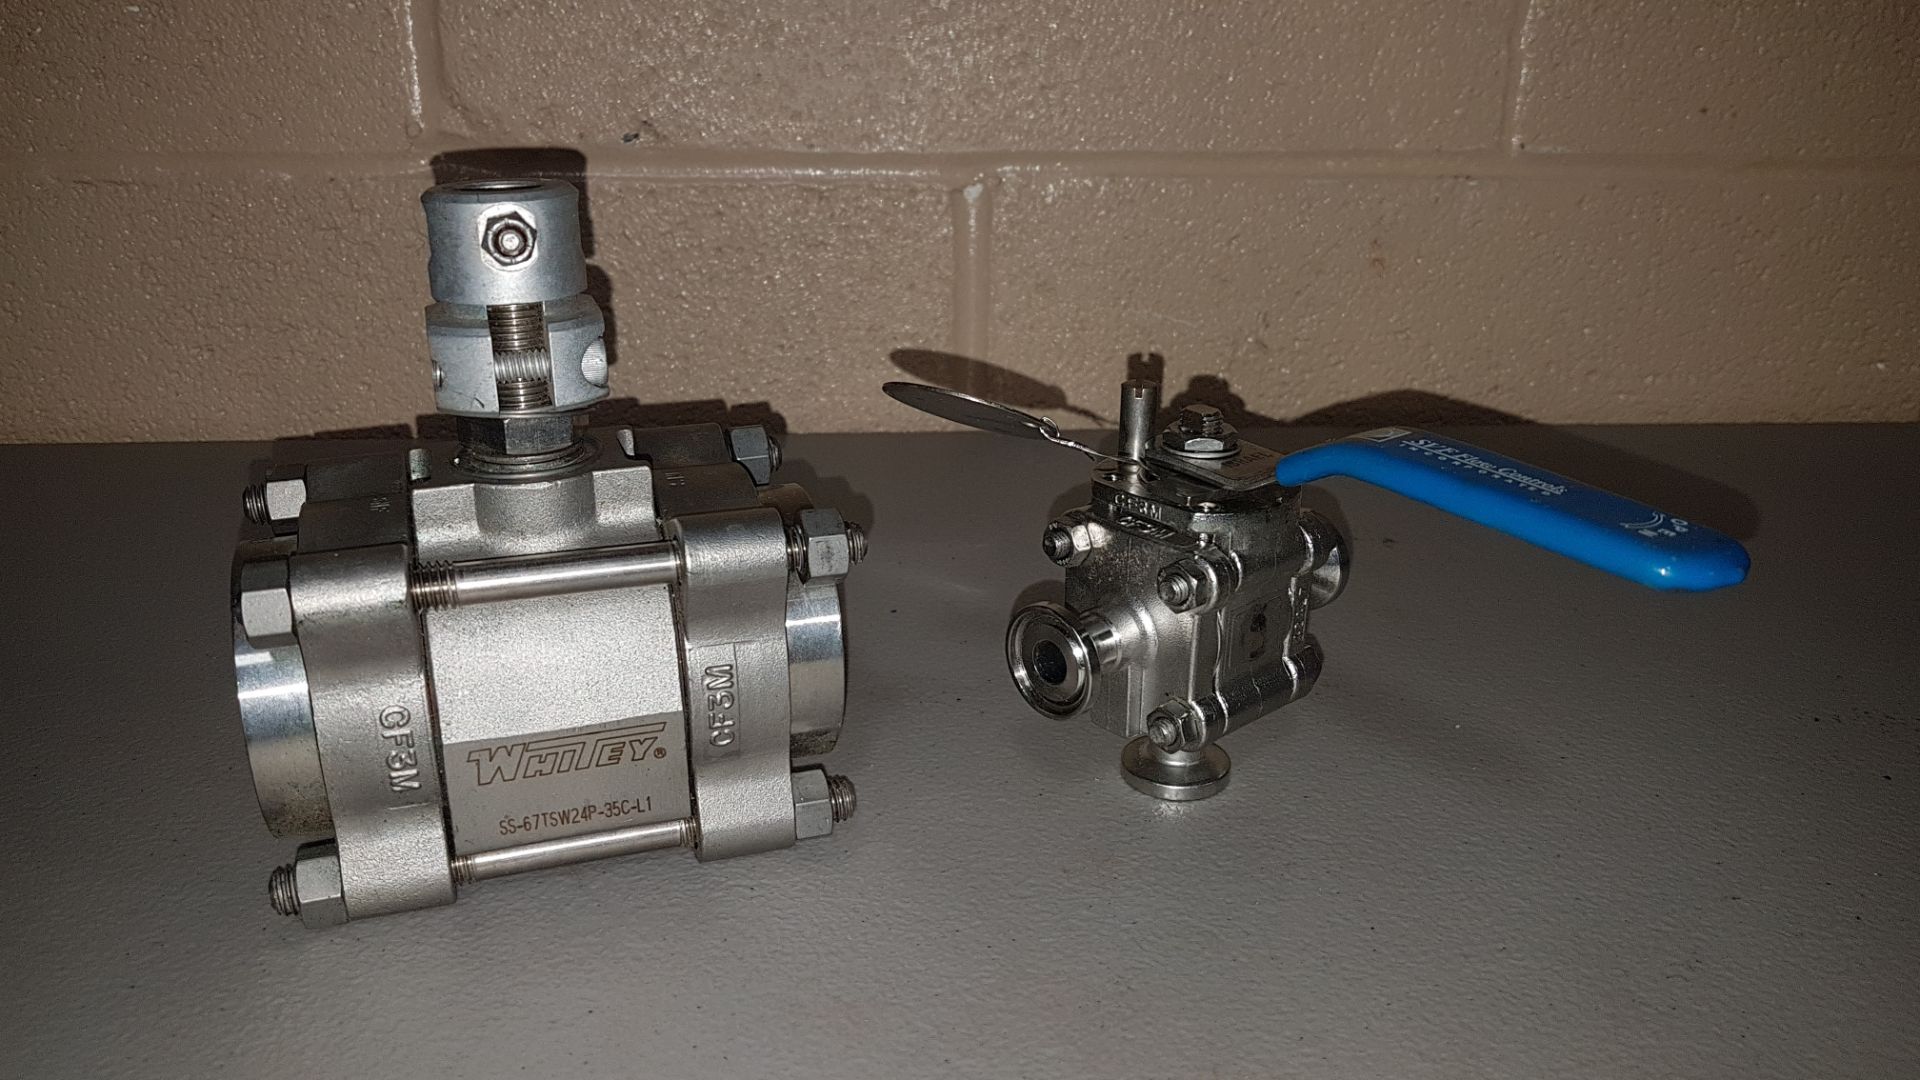 Lot of (2) stainless steel ball valves, 1.25" Whitey ball valve, and 0.5" SVT 3-way ball valve.